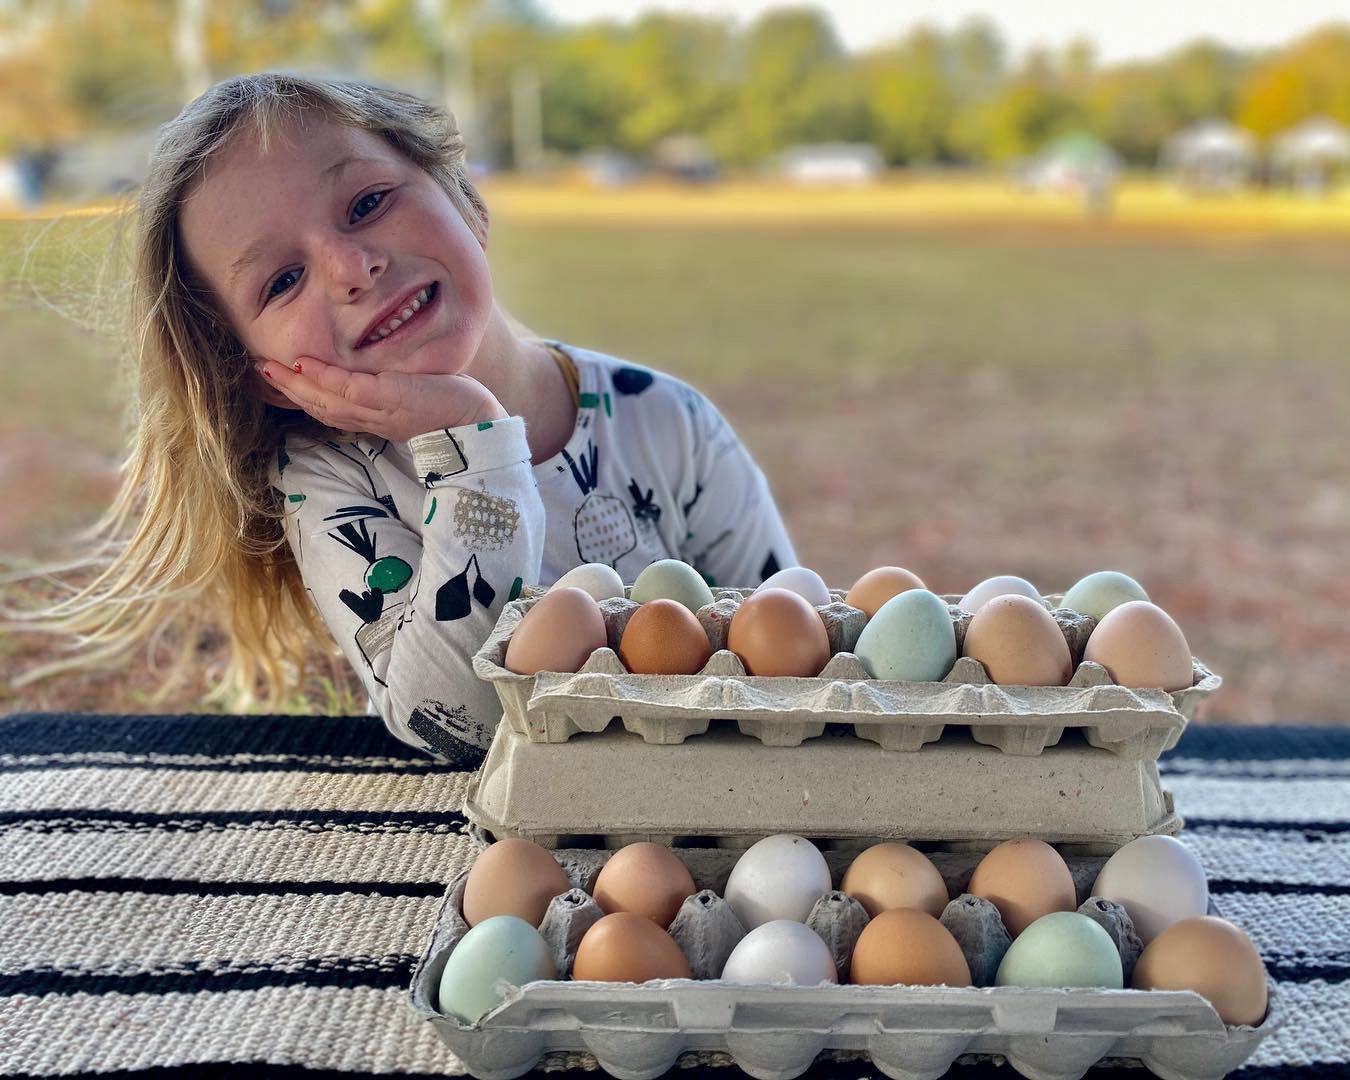 Locally Made Eggs - Farmers Market